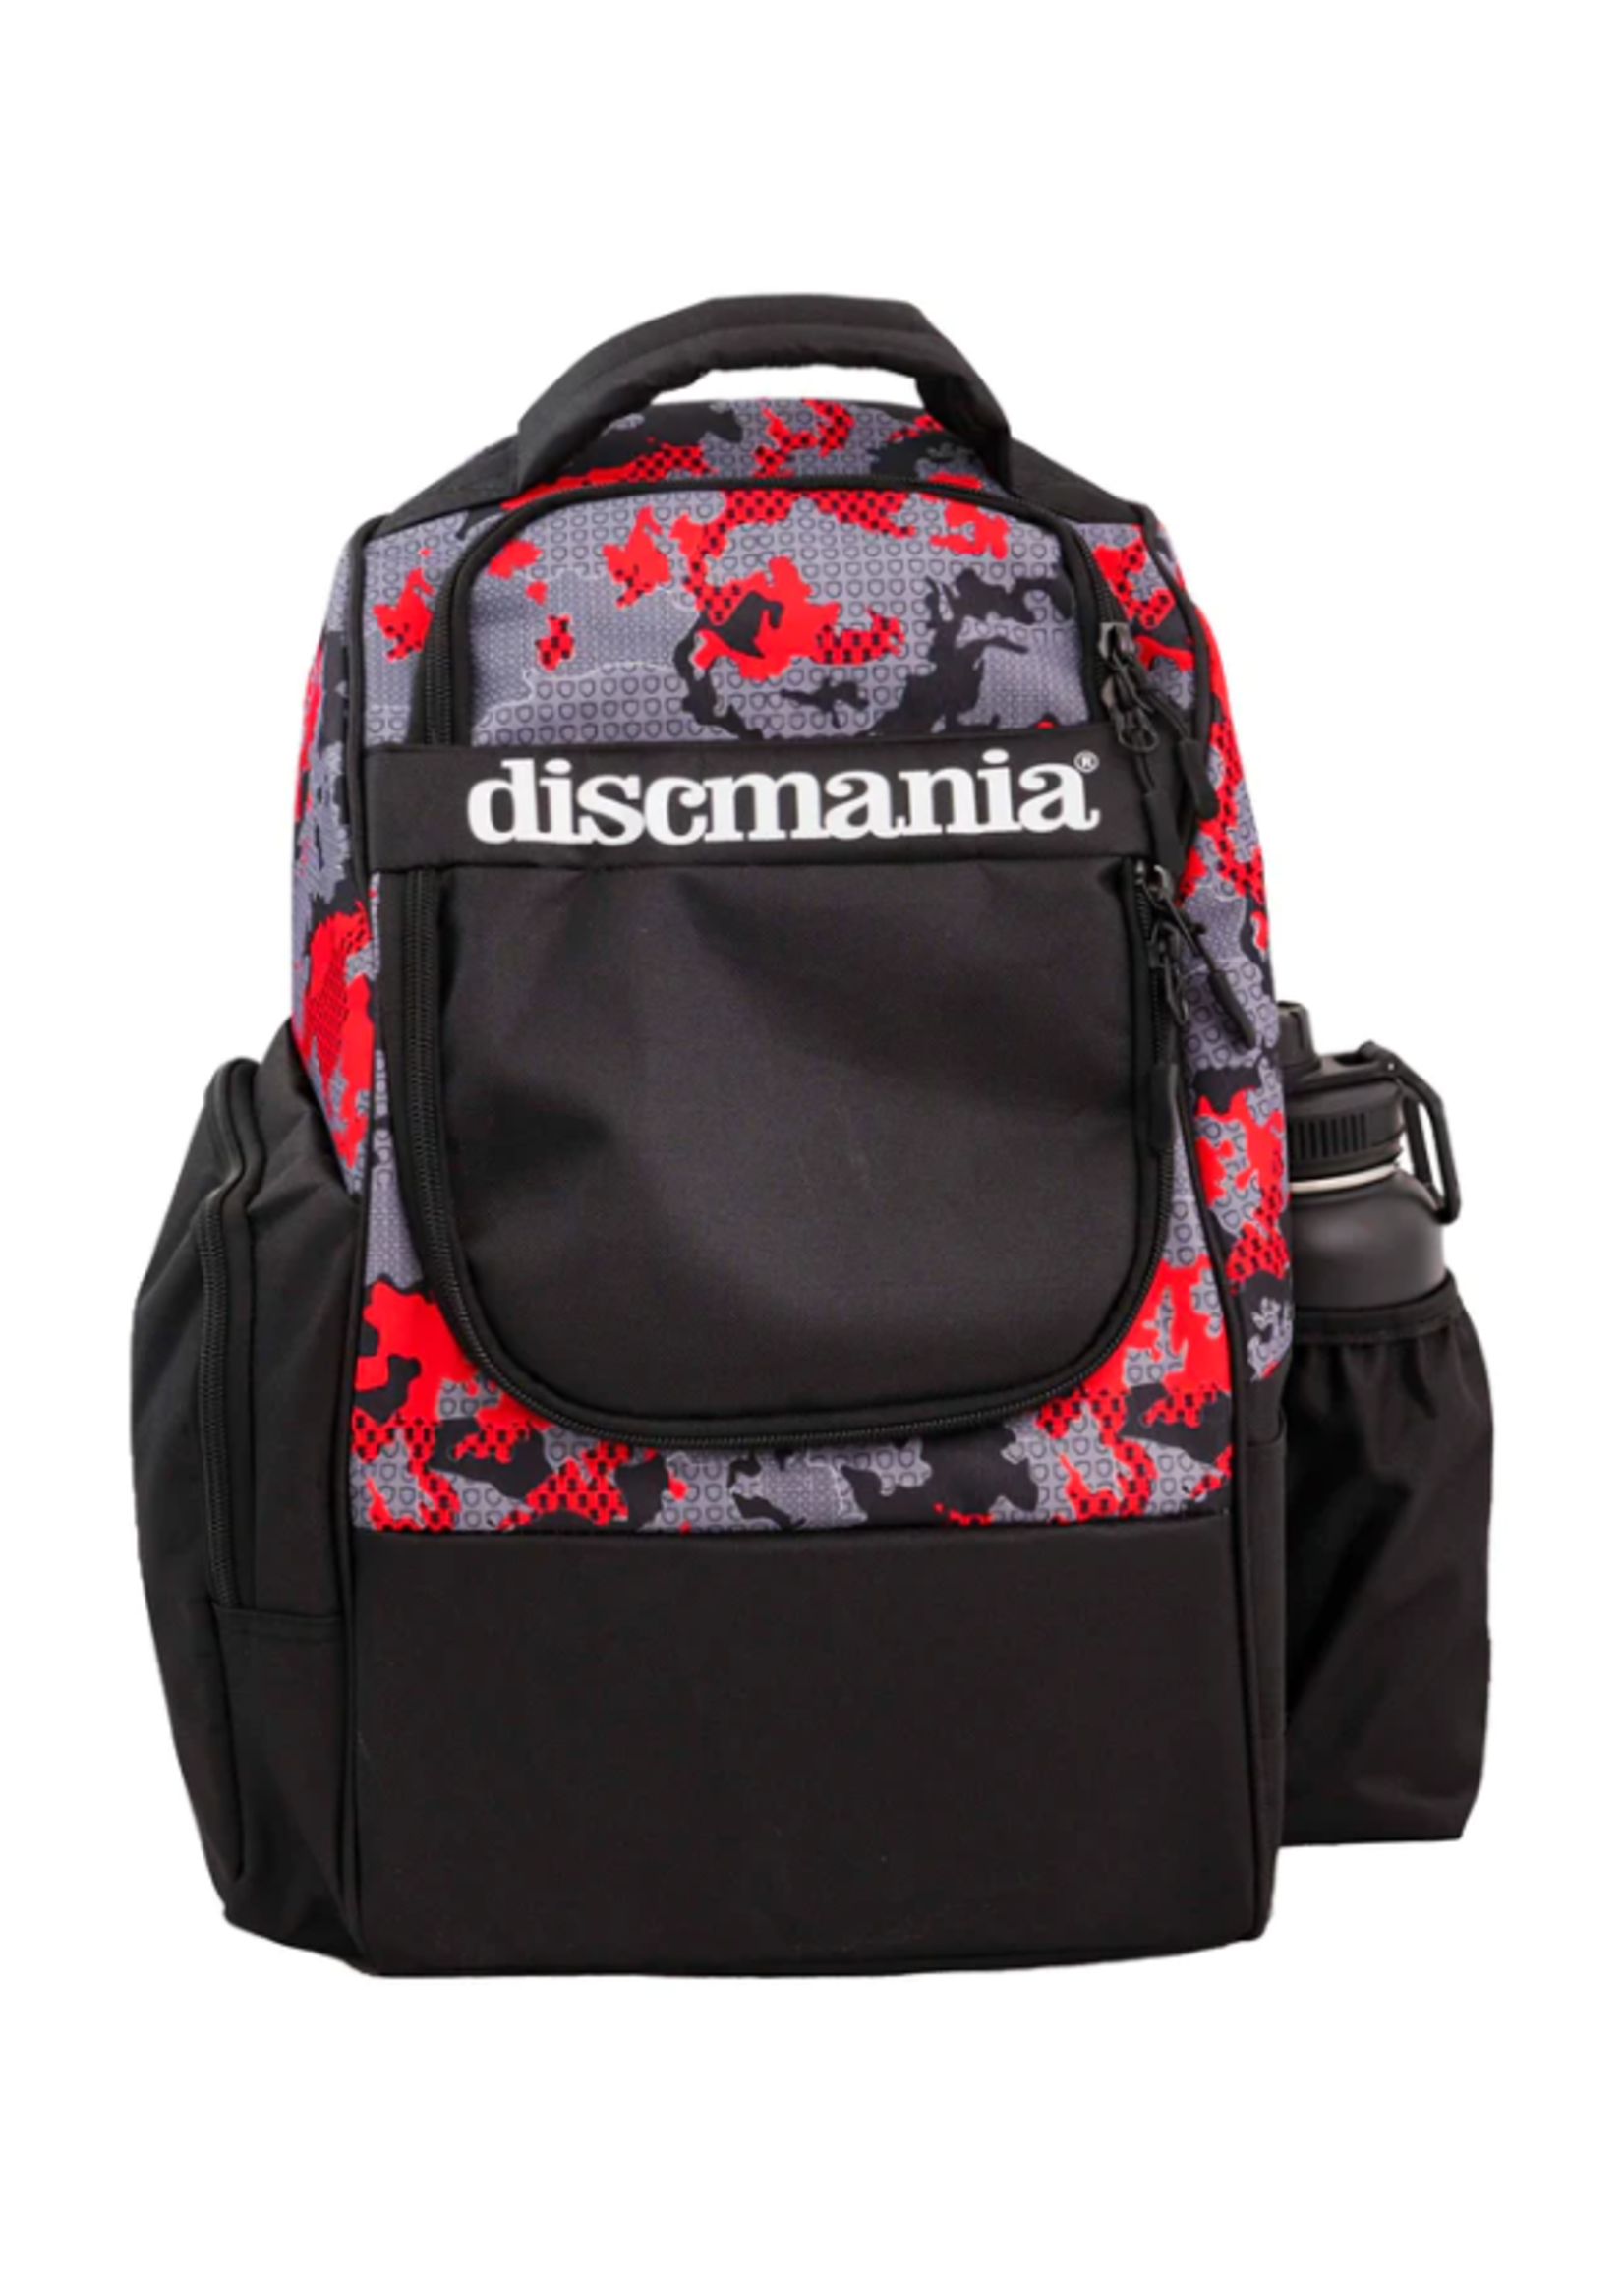 Discmania Discmania Fanatic Fly Bag